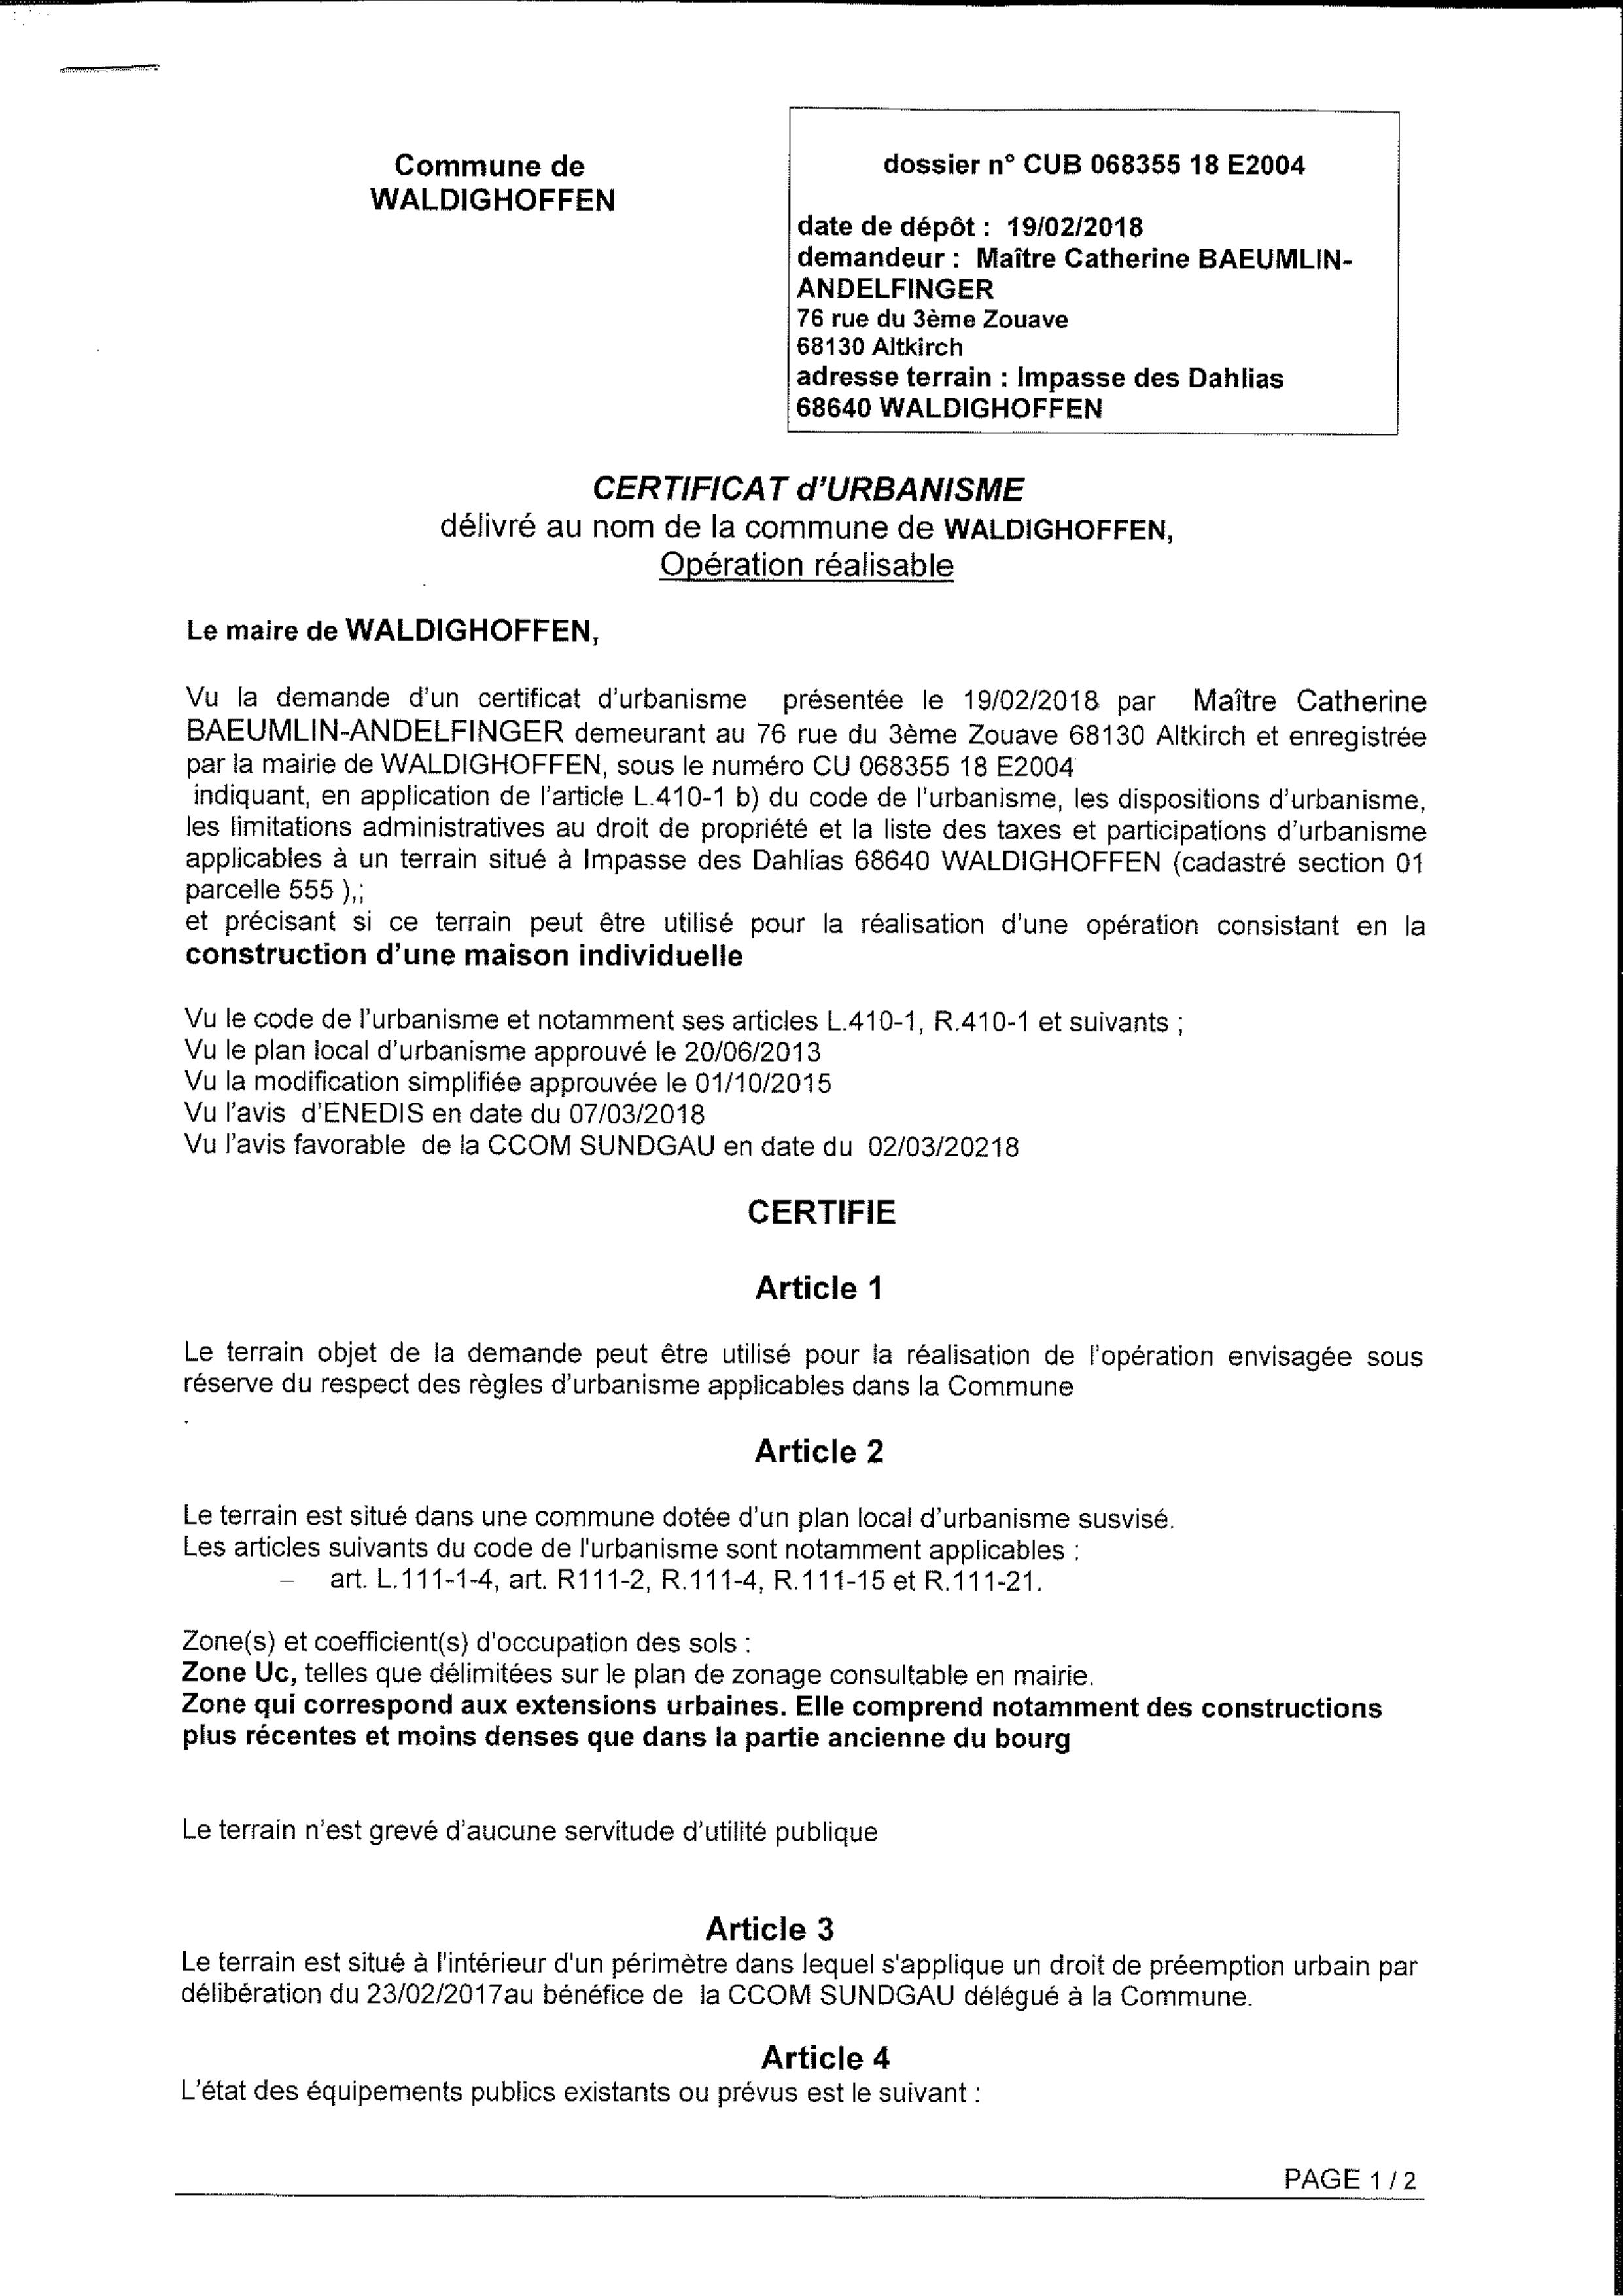 Certificat d'urbanisme opérationnel établi pour Maître Catherine BAEUMLIN-ANDELFINGER